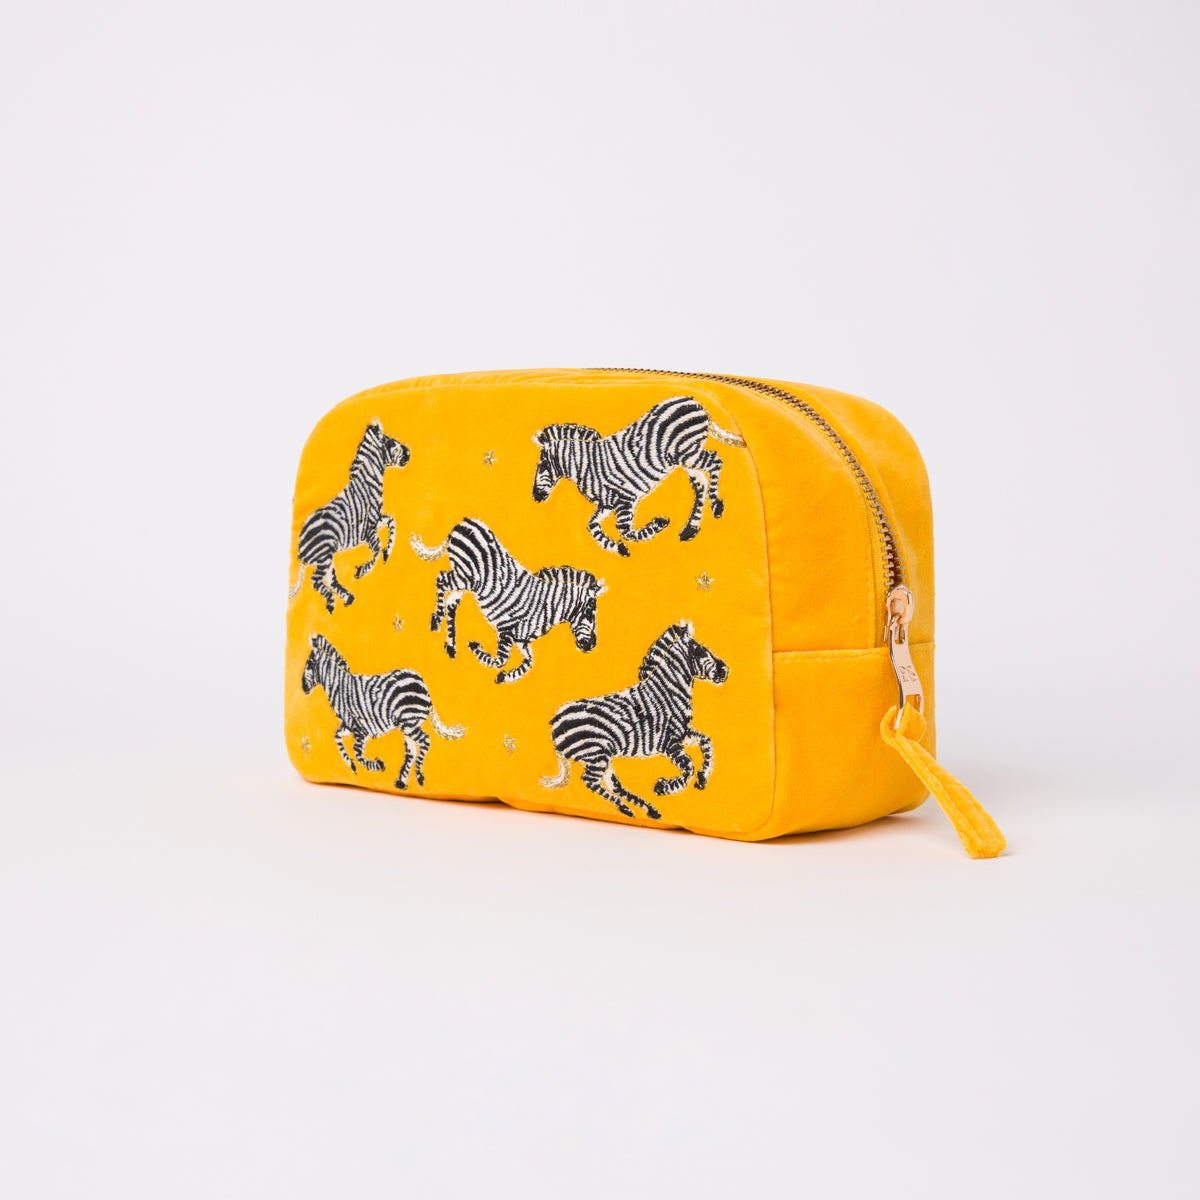 Zebra Yellow Cosmetic Bag